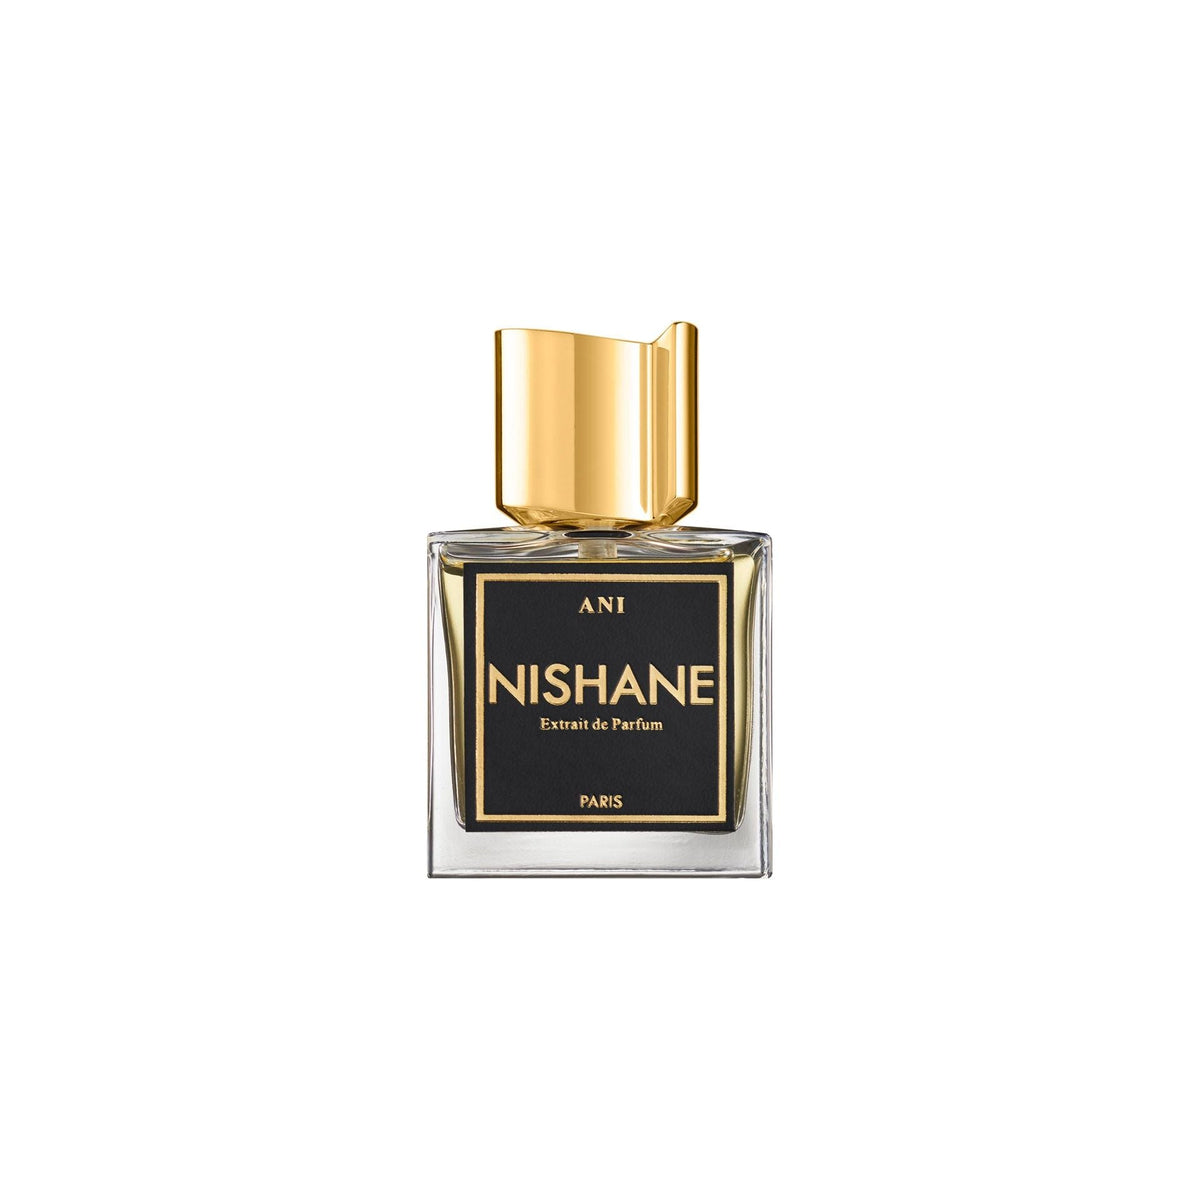 Nishane Ani Extrait De Parfum Sample/Decants - Snap Perfumes